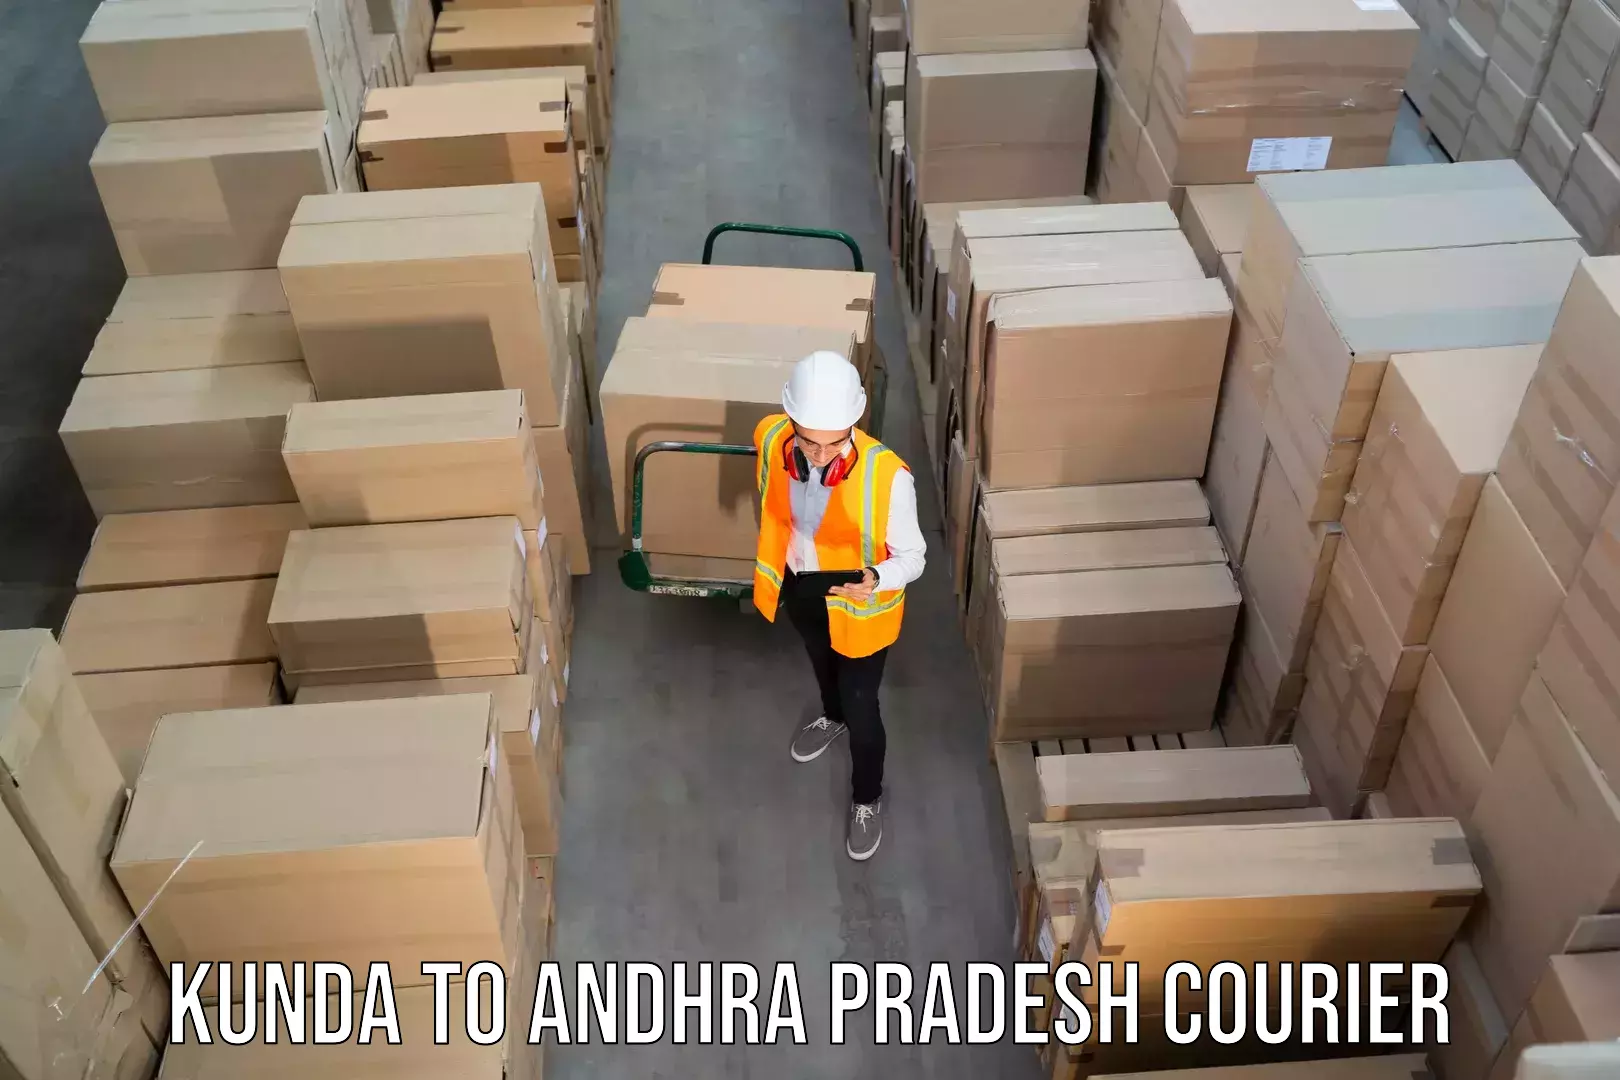 Courier service innovation in Kunda to Parvathipuram